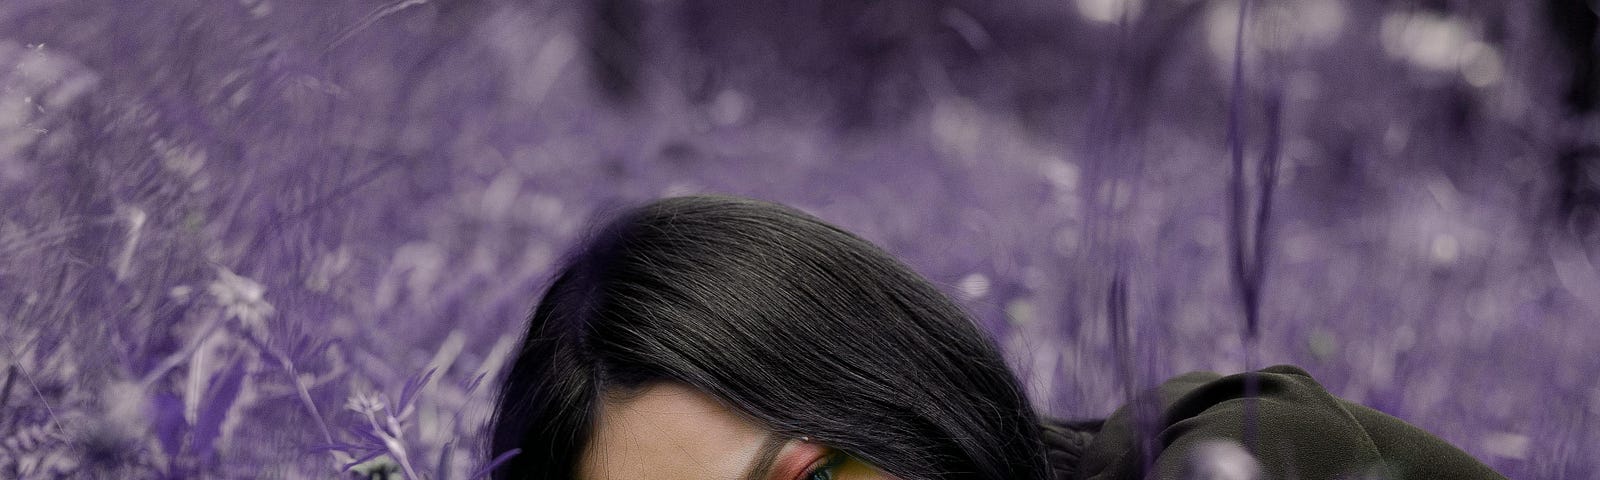 A woman with make-up lying among purple flowers.